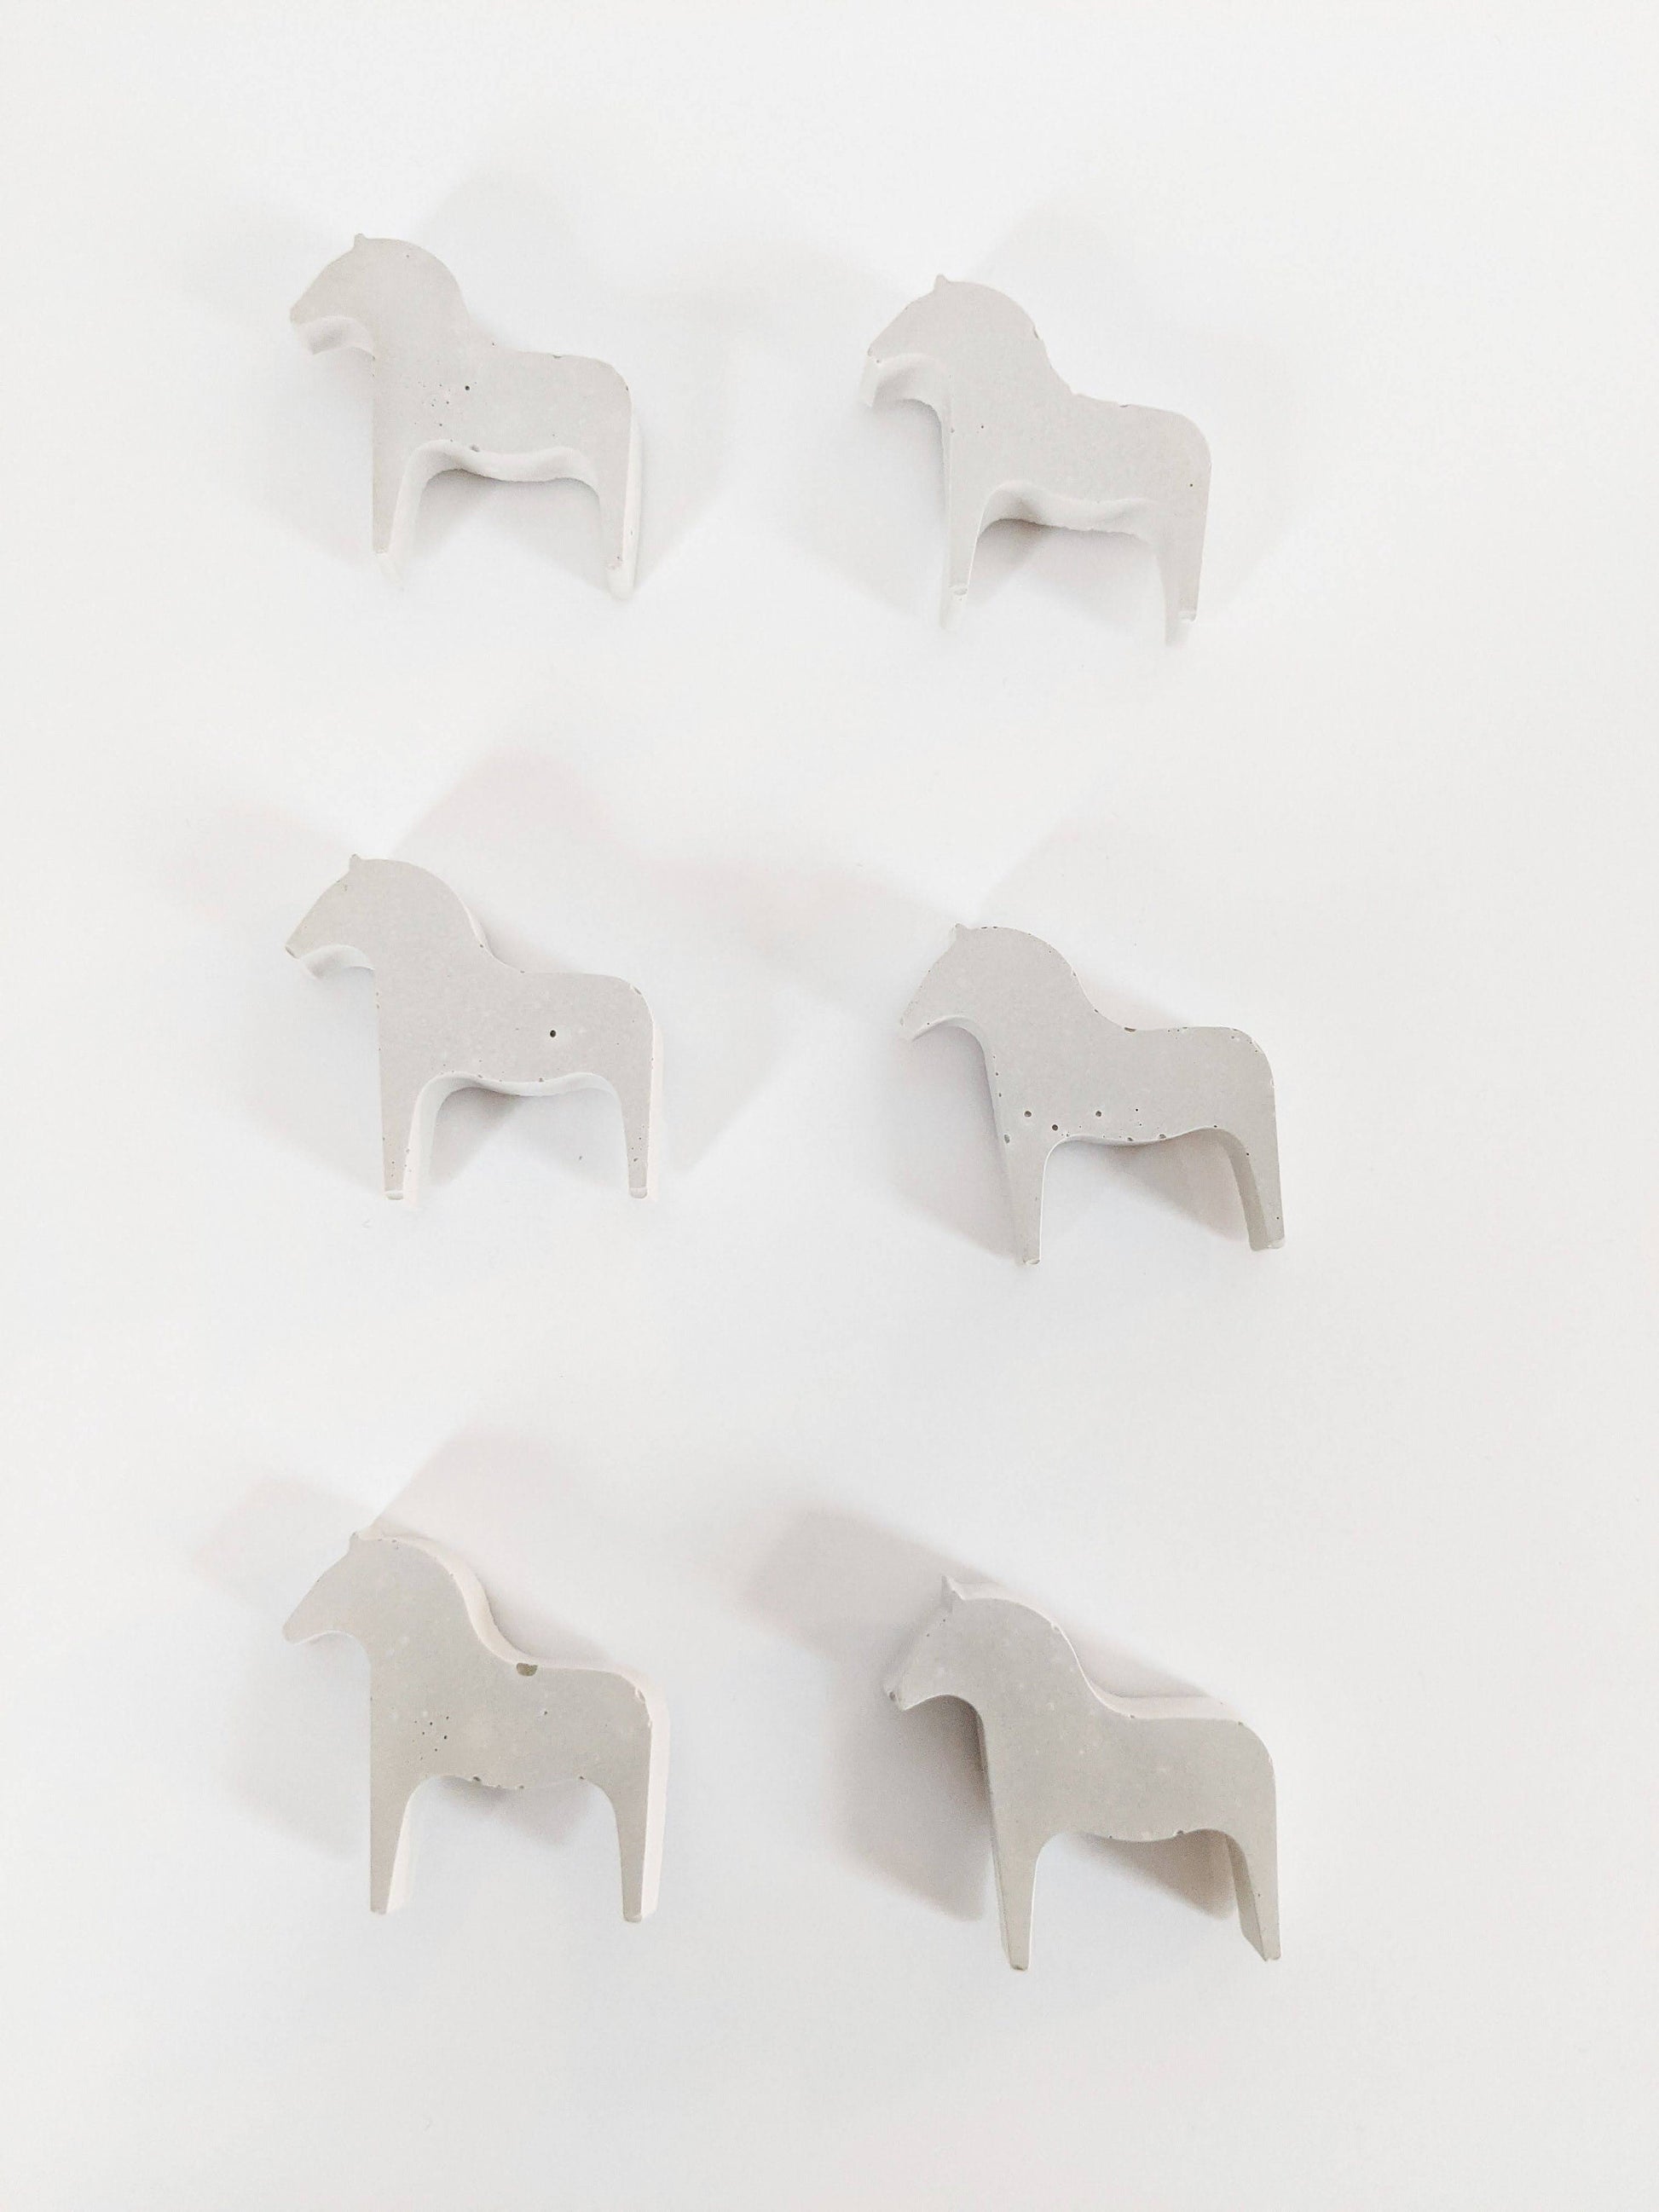 Dala Horse Concrete Magnets. Scandi Minimalist Fridge Magnets. Modern Home Office Magnets. Gifts under 20. Set of 3 Magnets.